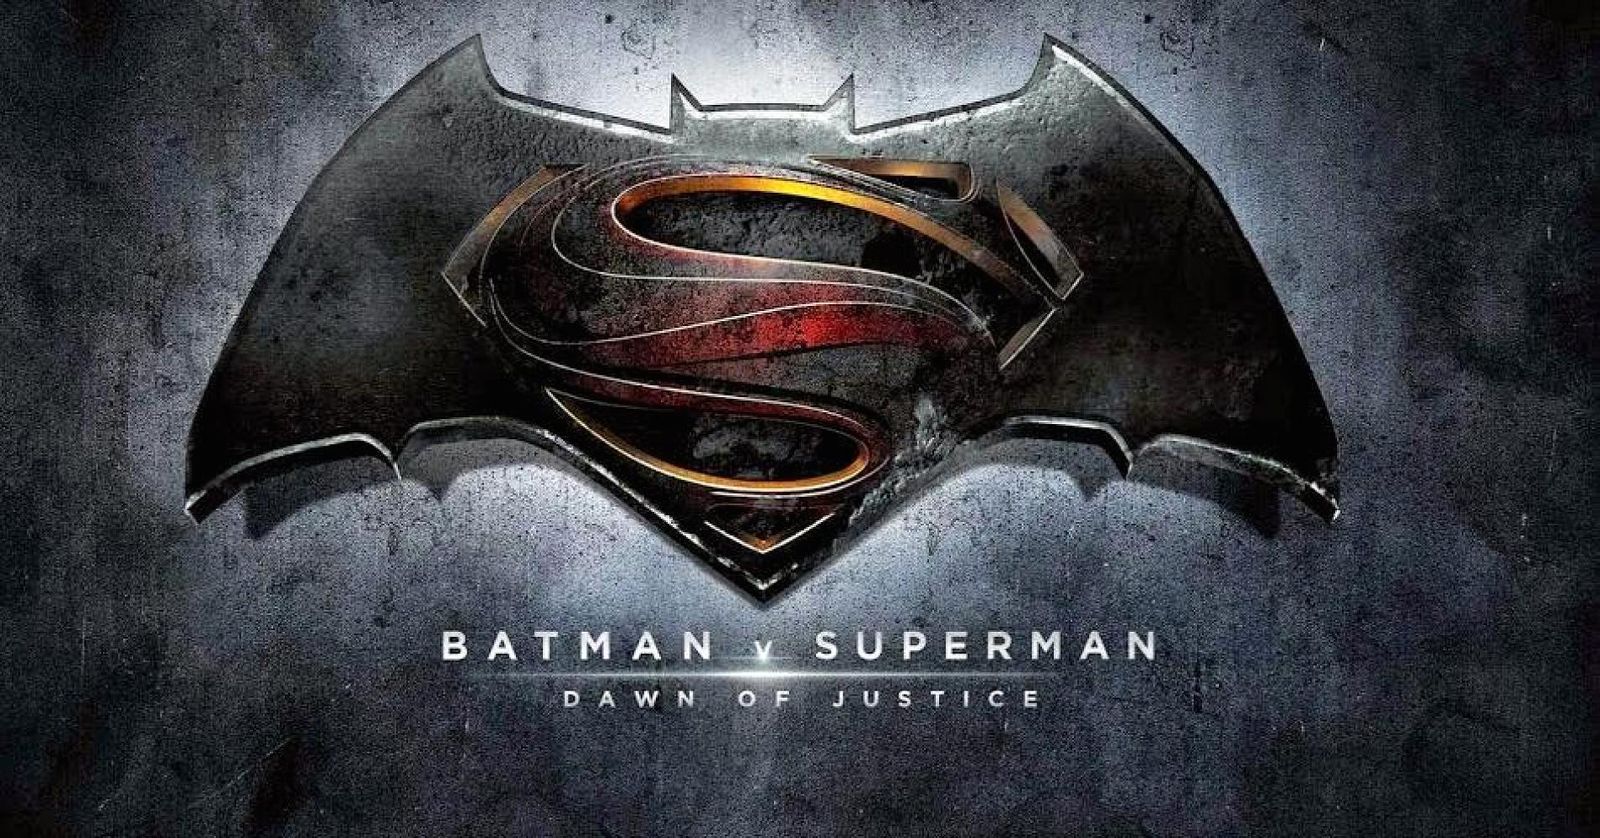 Batman v Superman Crosses $530 Million Globally